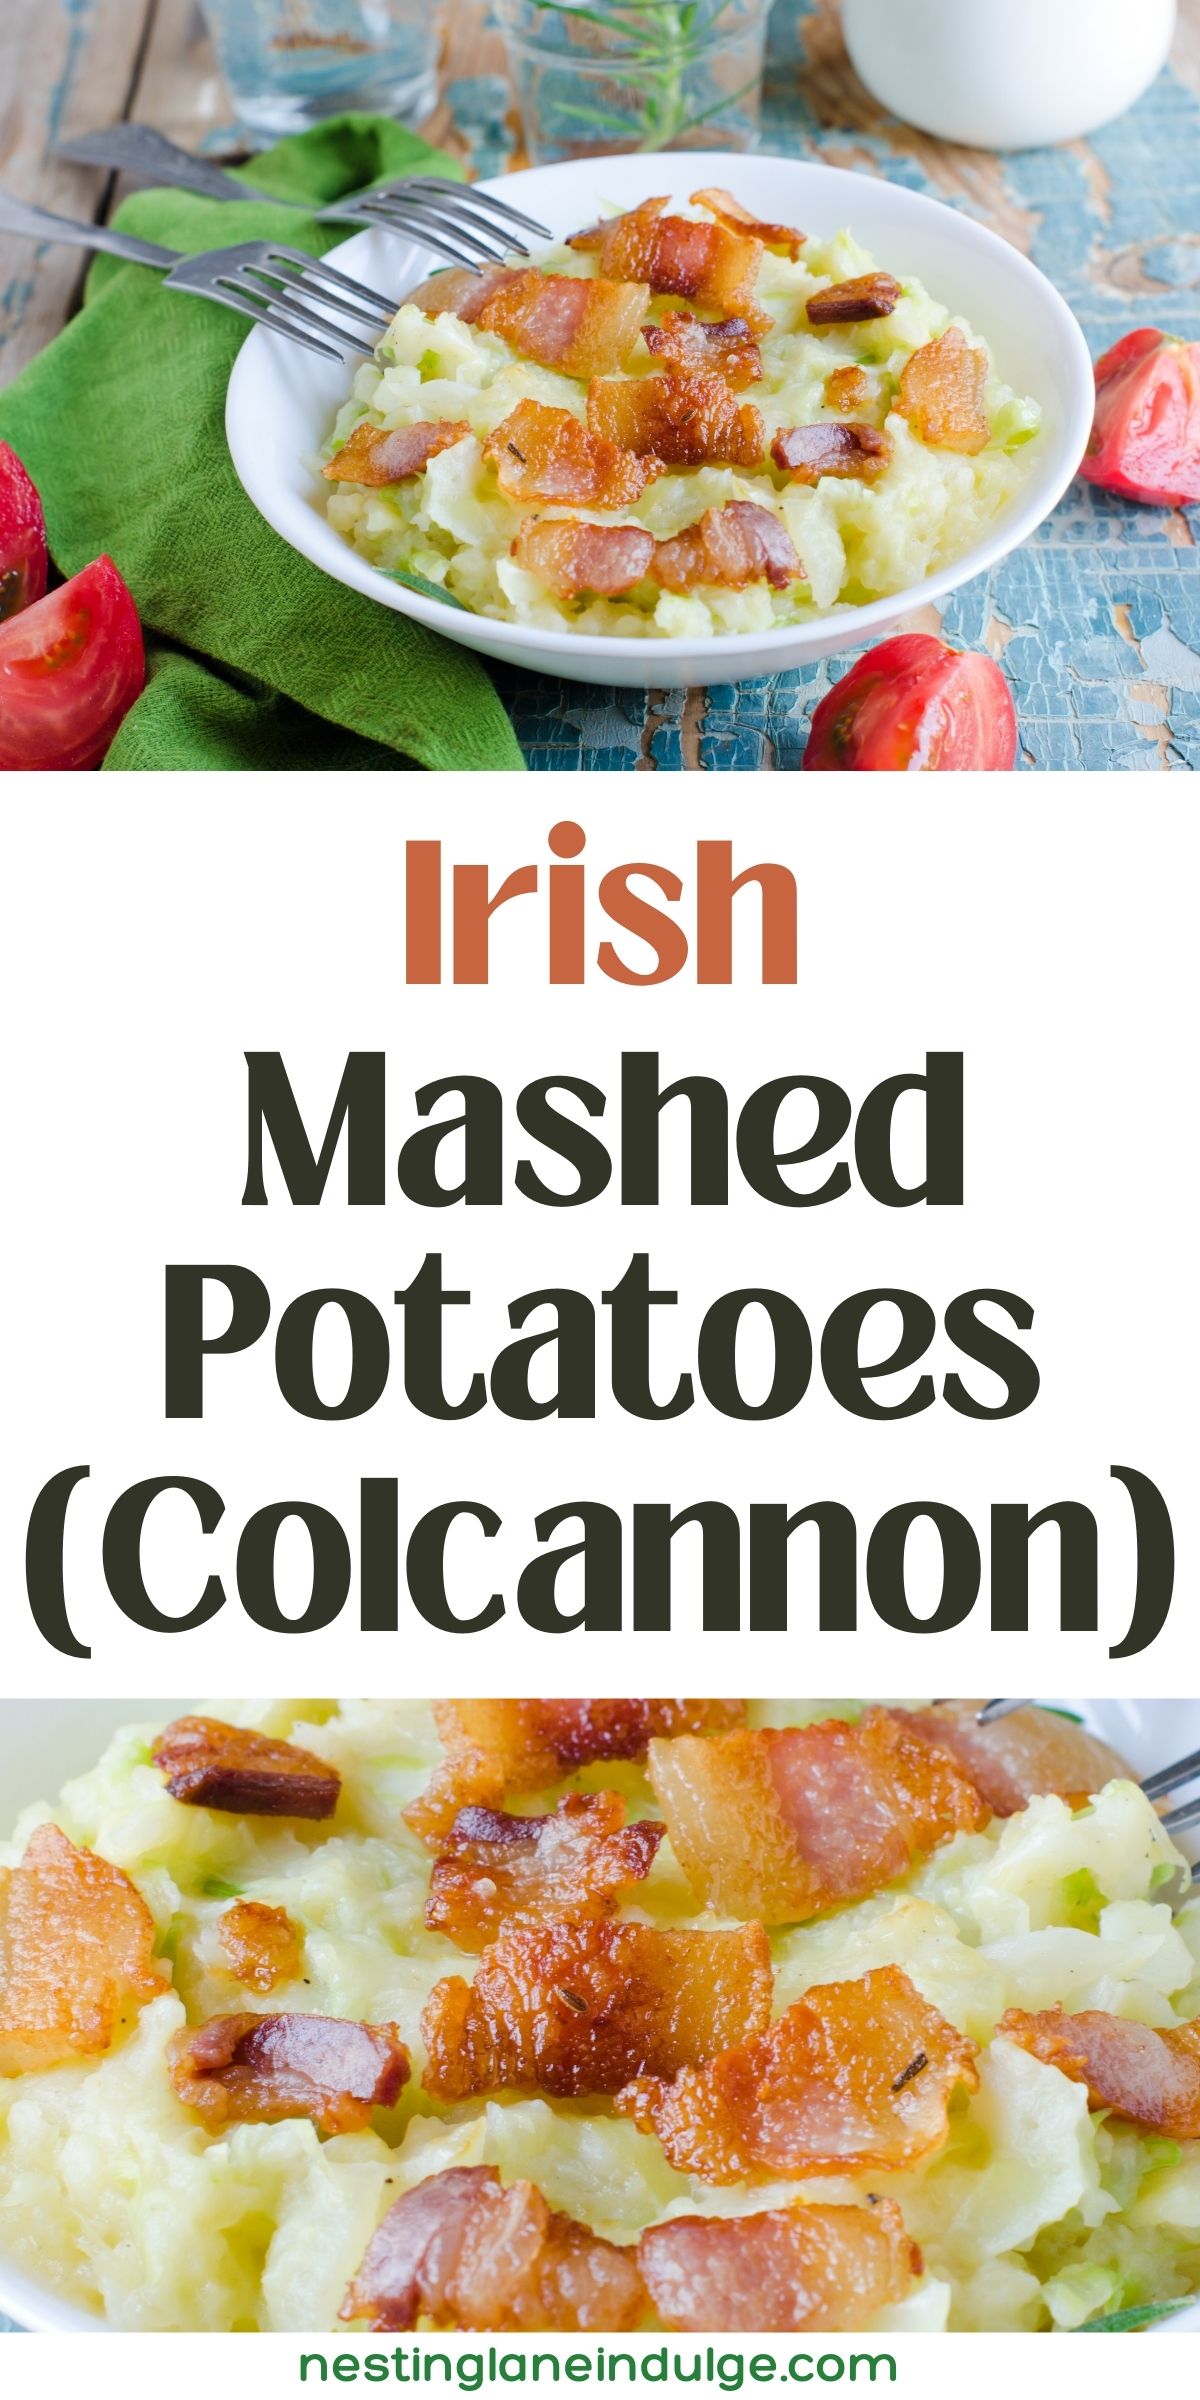 Colcannon (Irish Mashed Potatoes) Recipe Graphic.